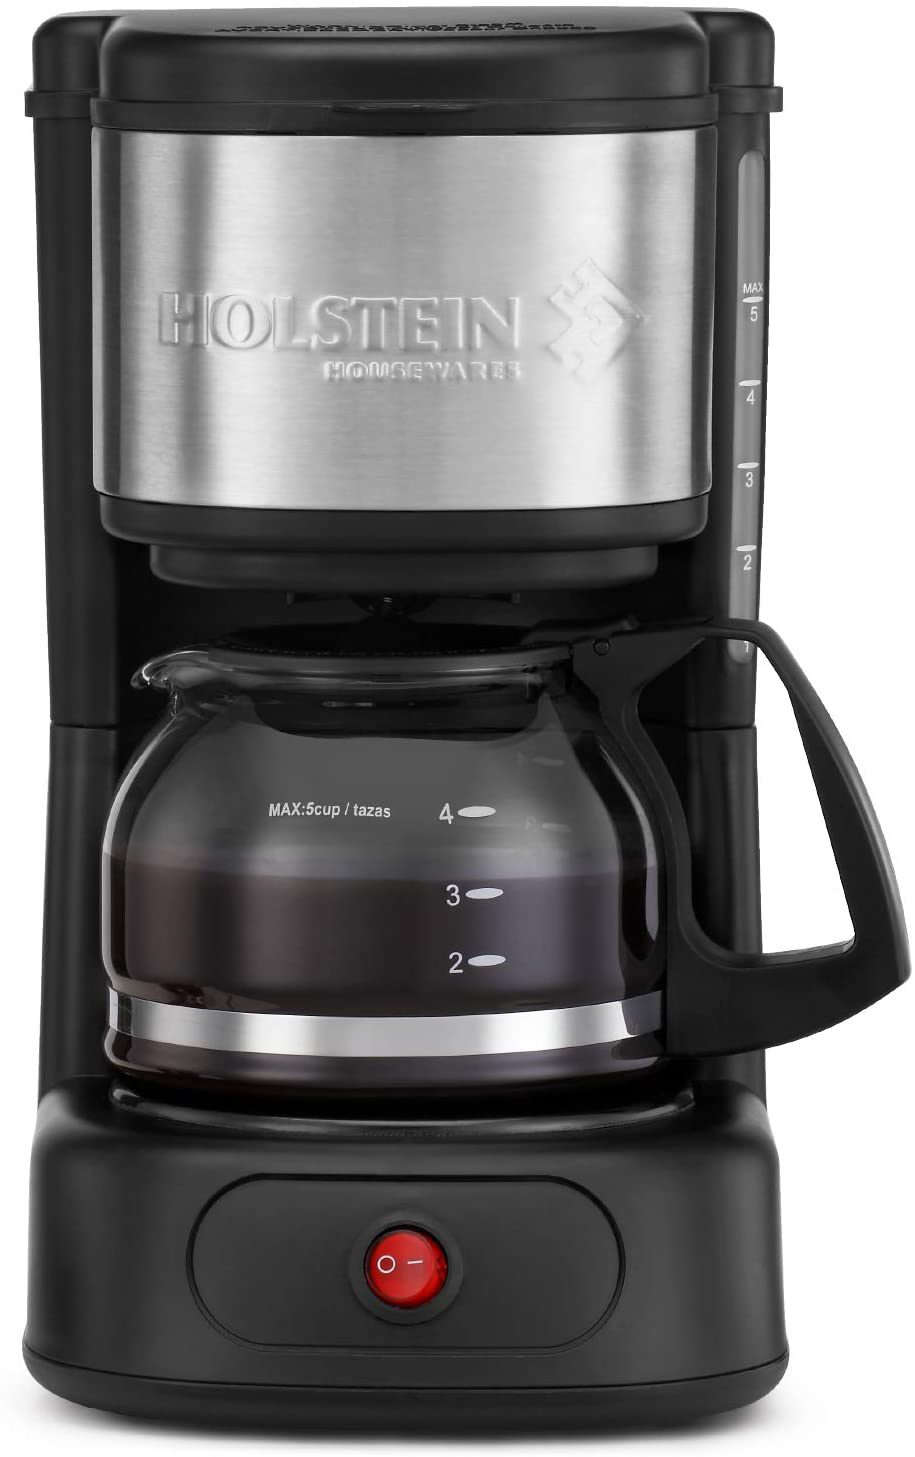 Holstein Housewares H-0911501 5-Cup Coffee Maker, Black